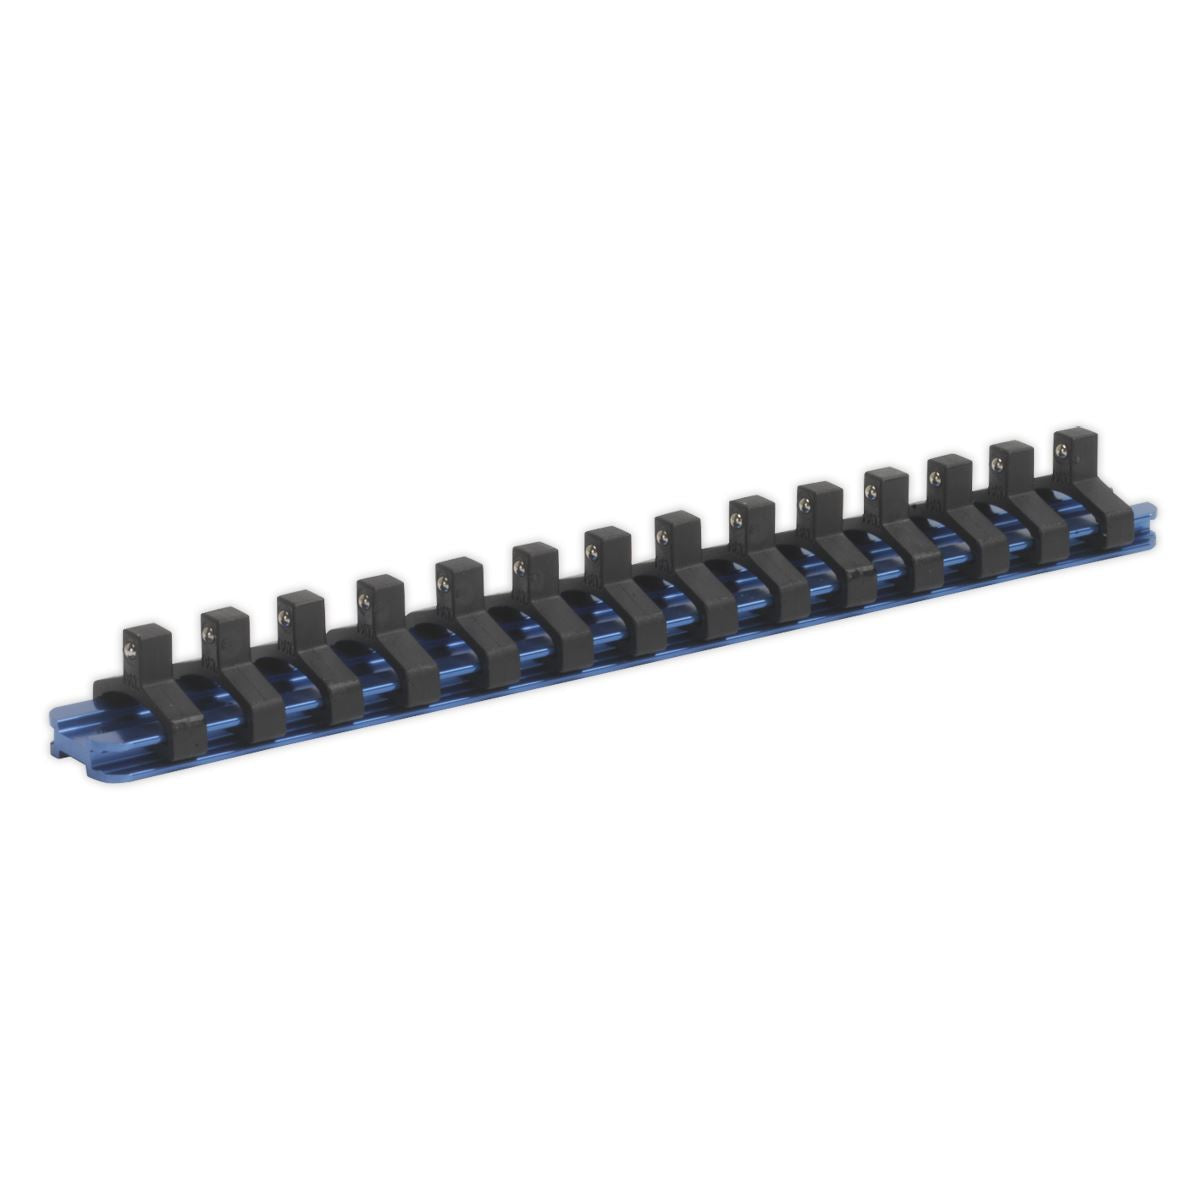 Sealey Premier Socket Retaining Rail with 14 Clips Aluminium 1/4"Sq Drive